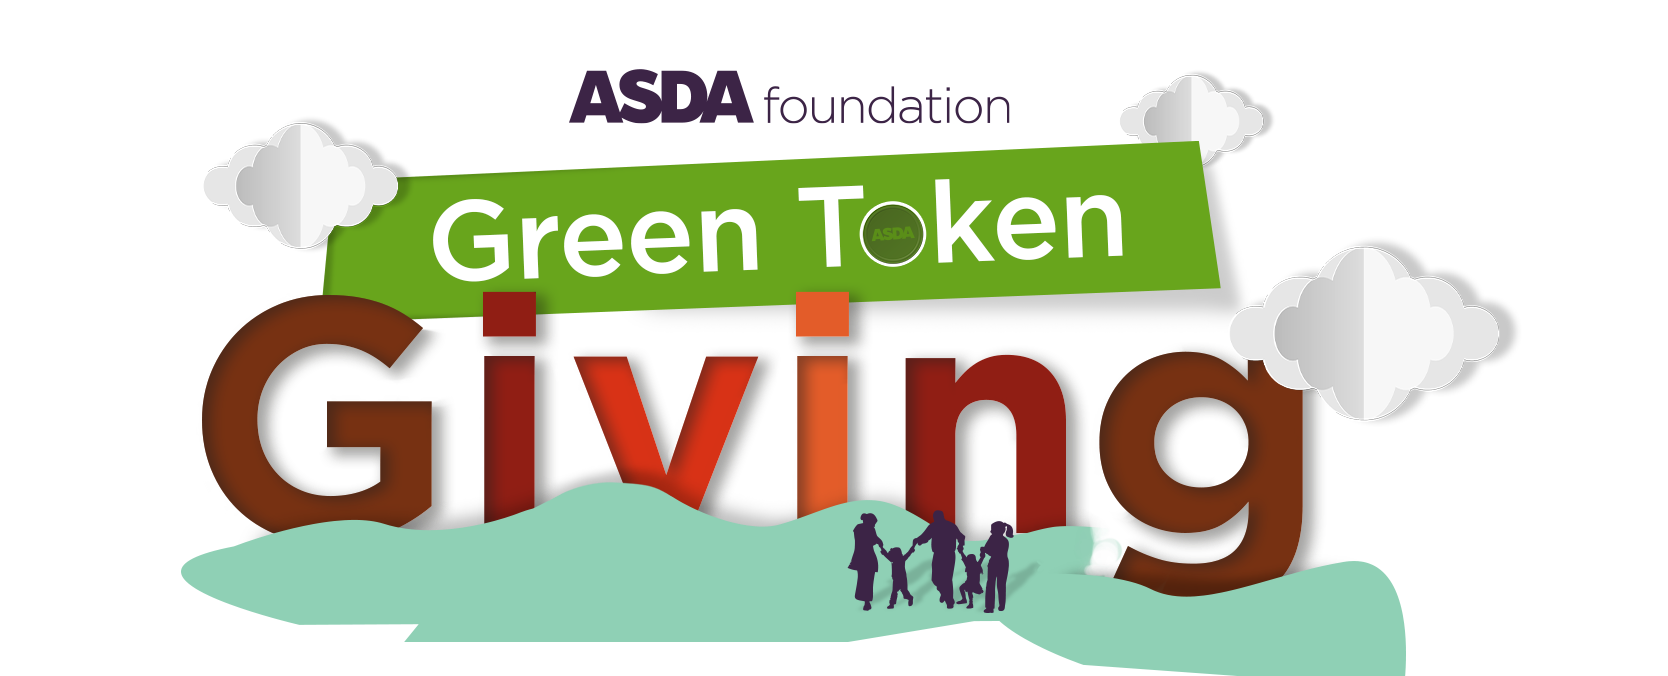 Asda Green tokens helping charities